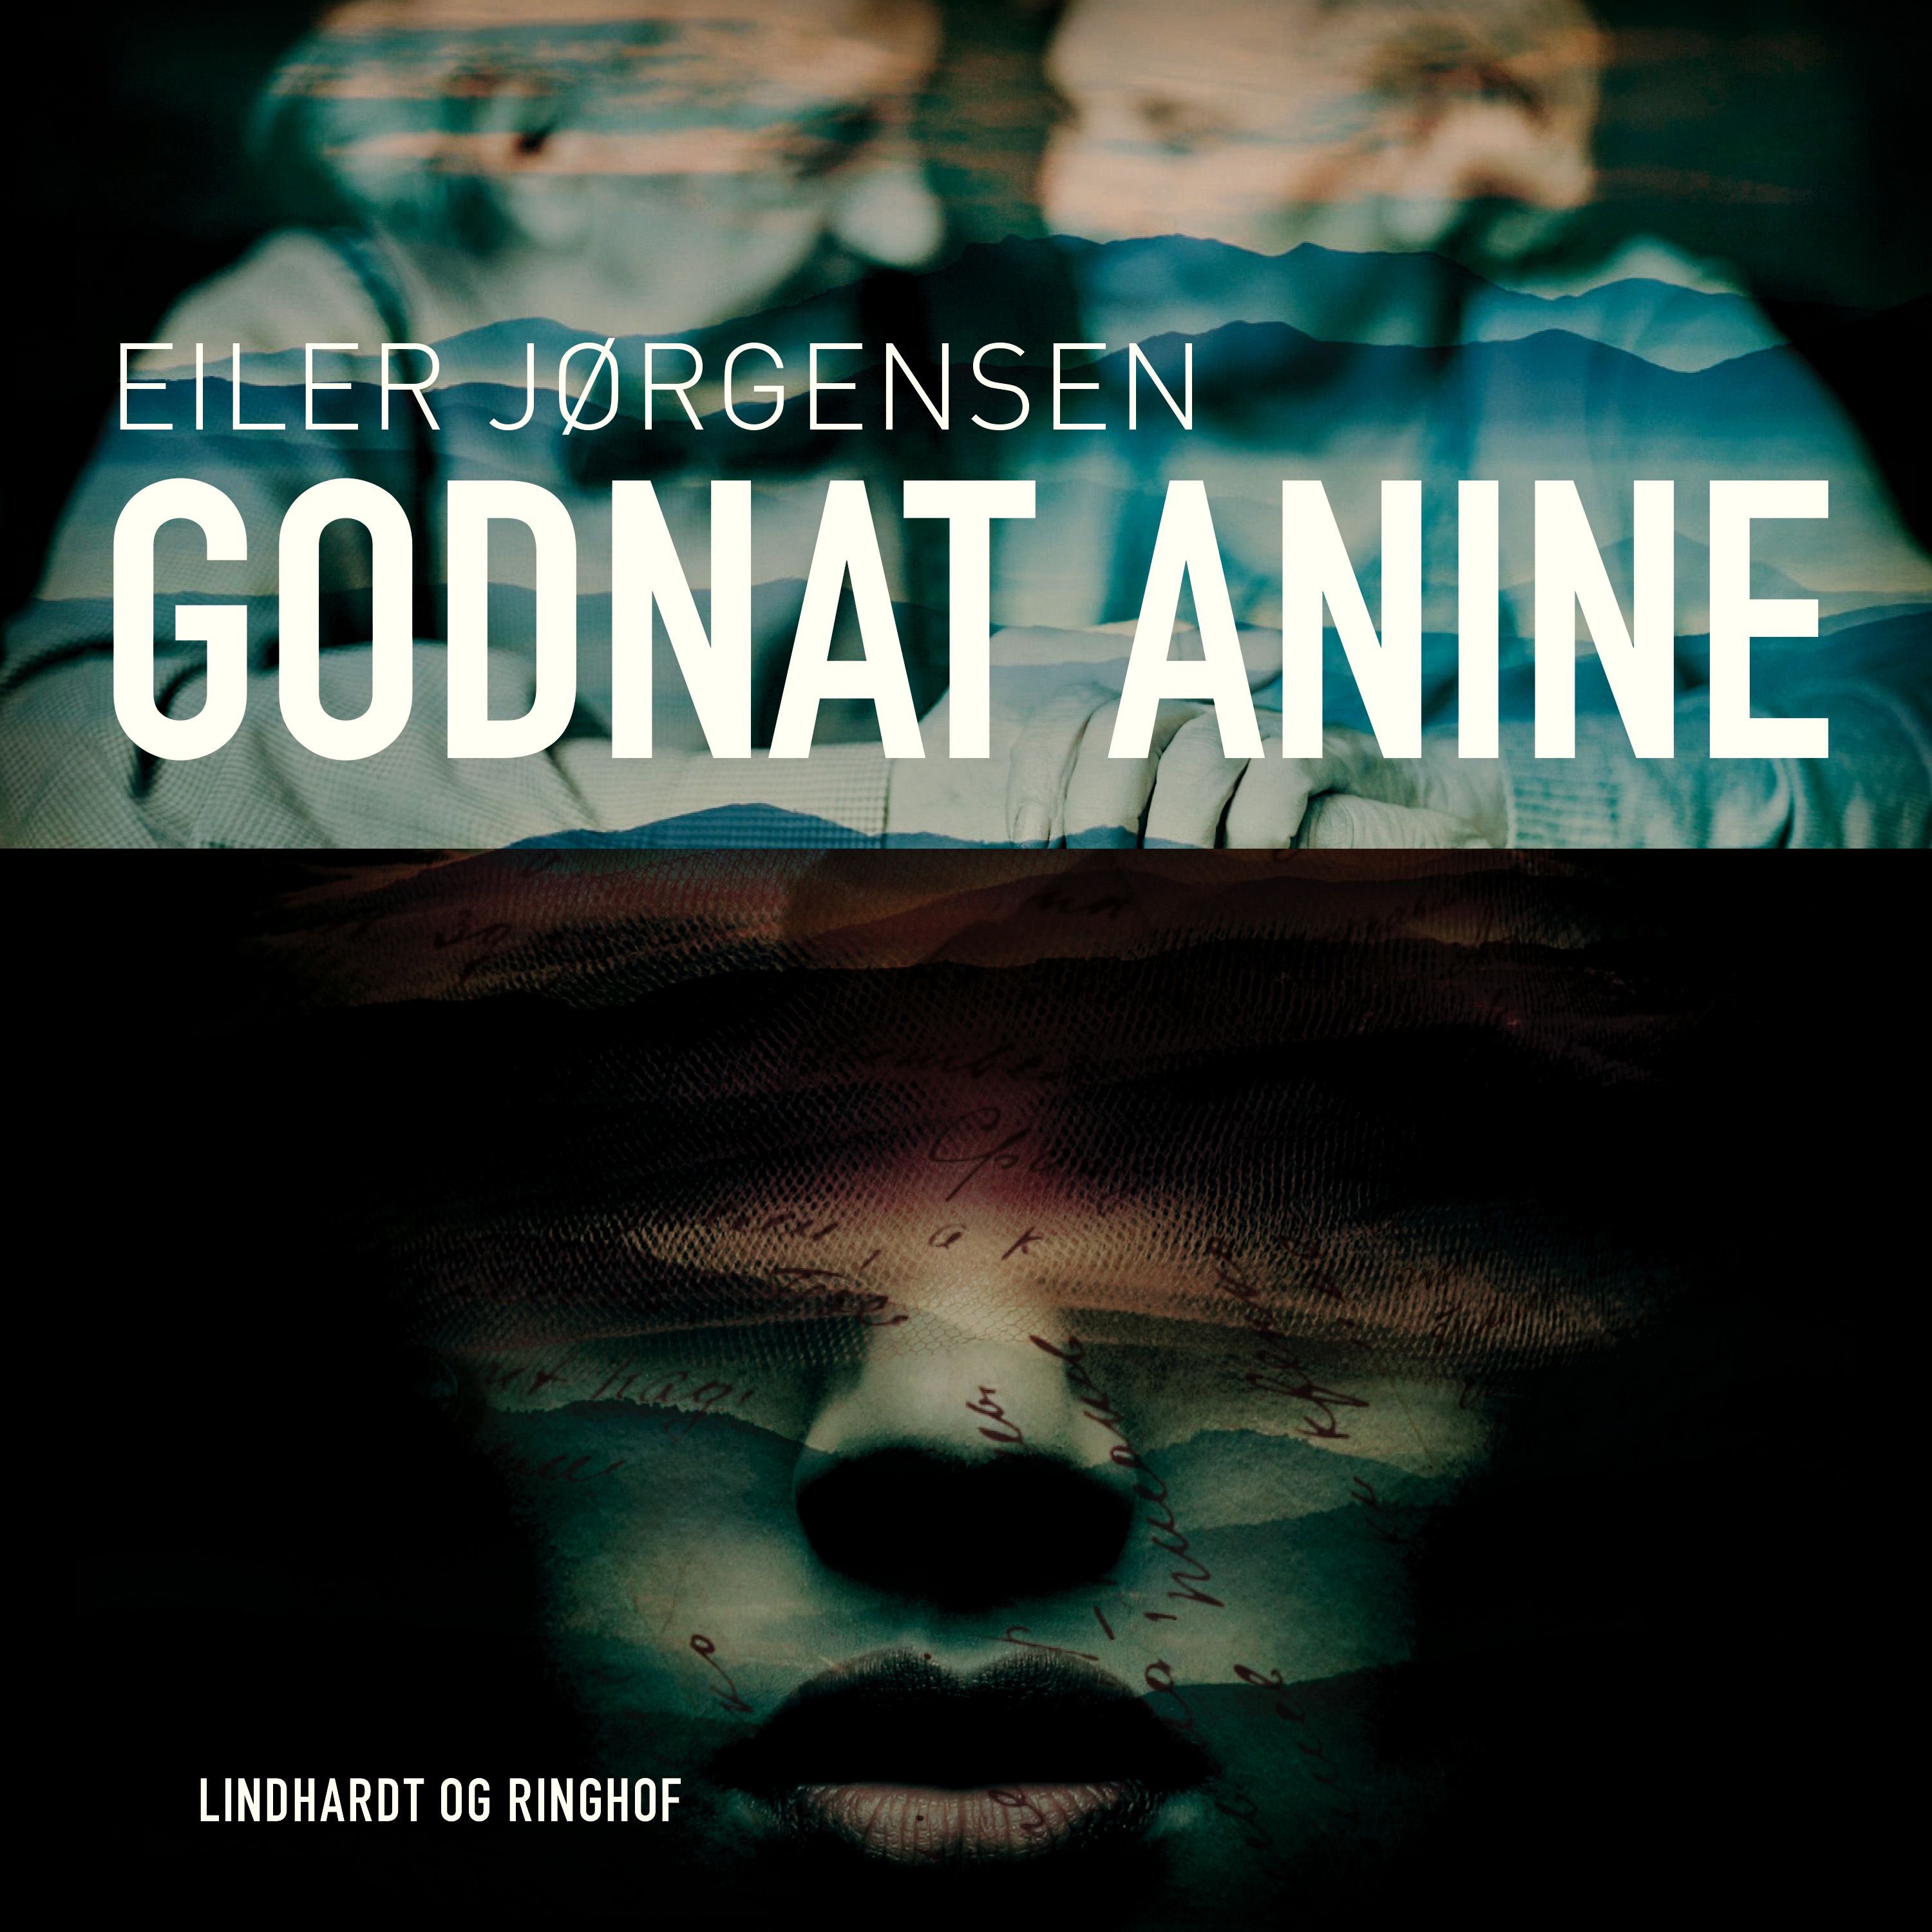 Godnat Anine, ljudbok av Eiler Jørgensen